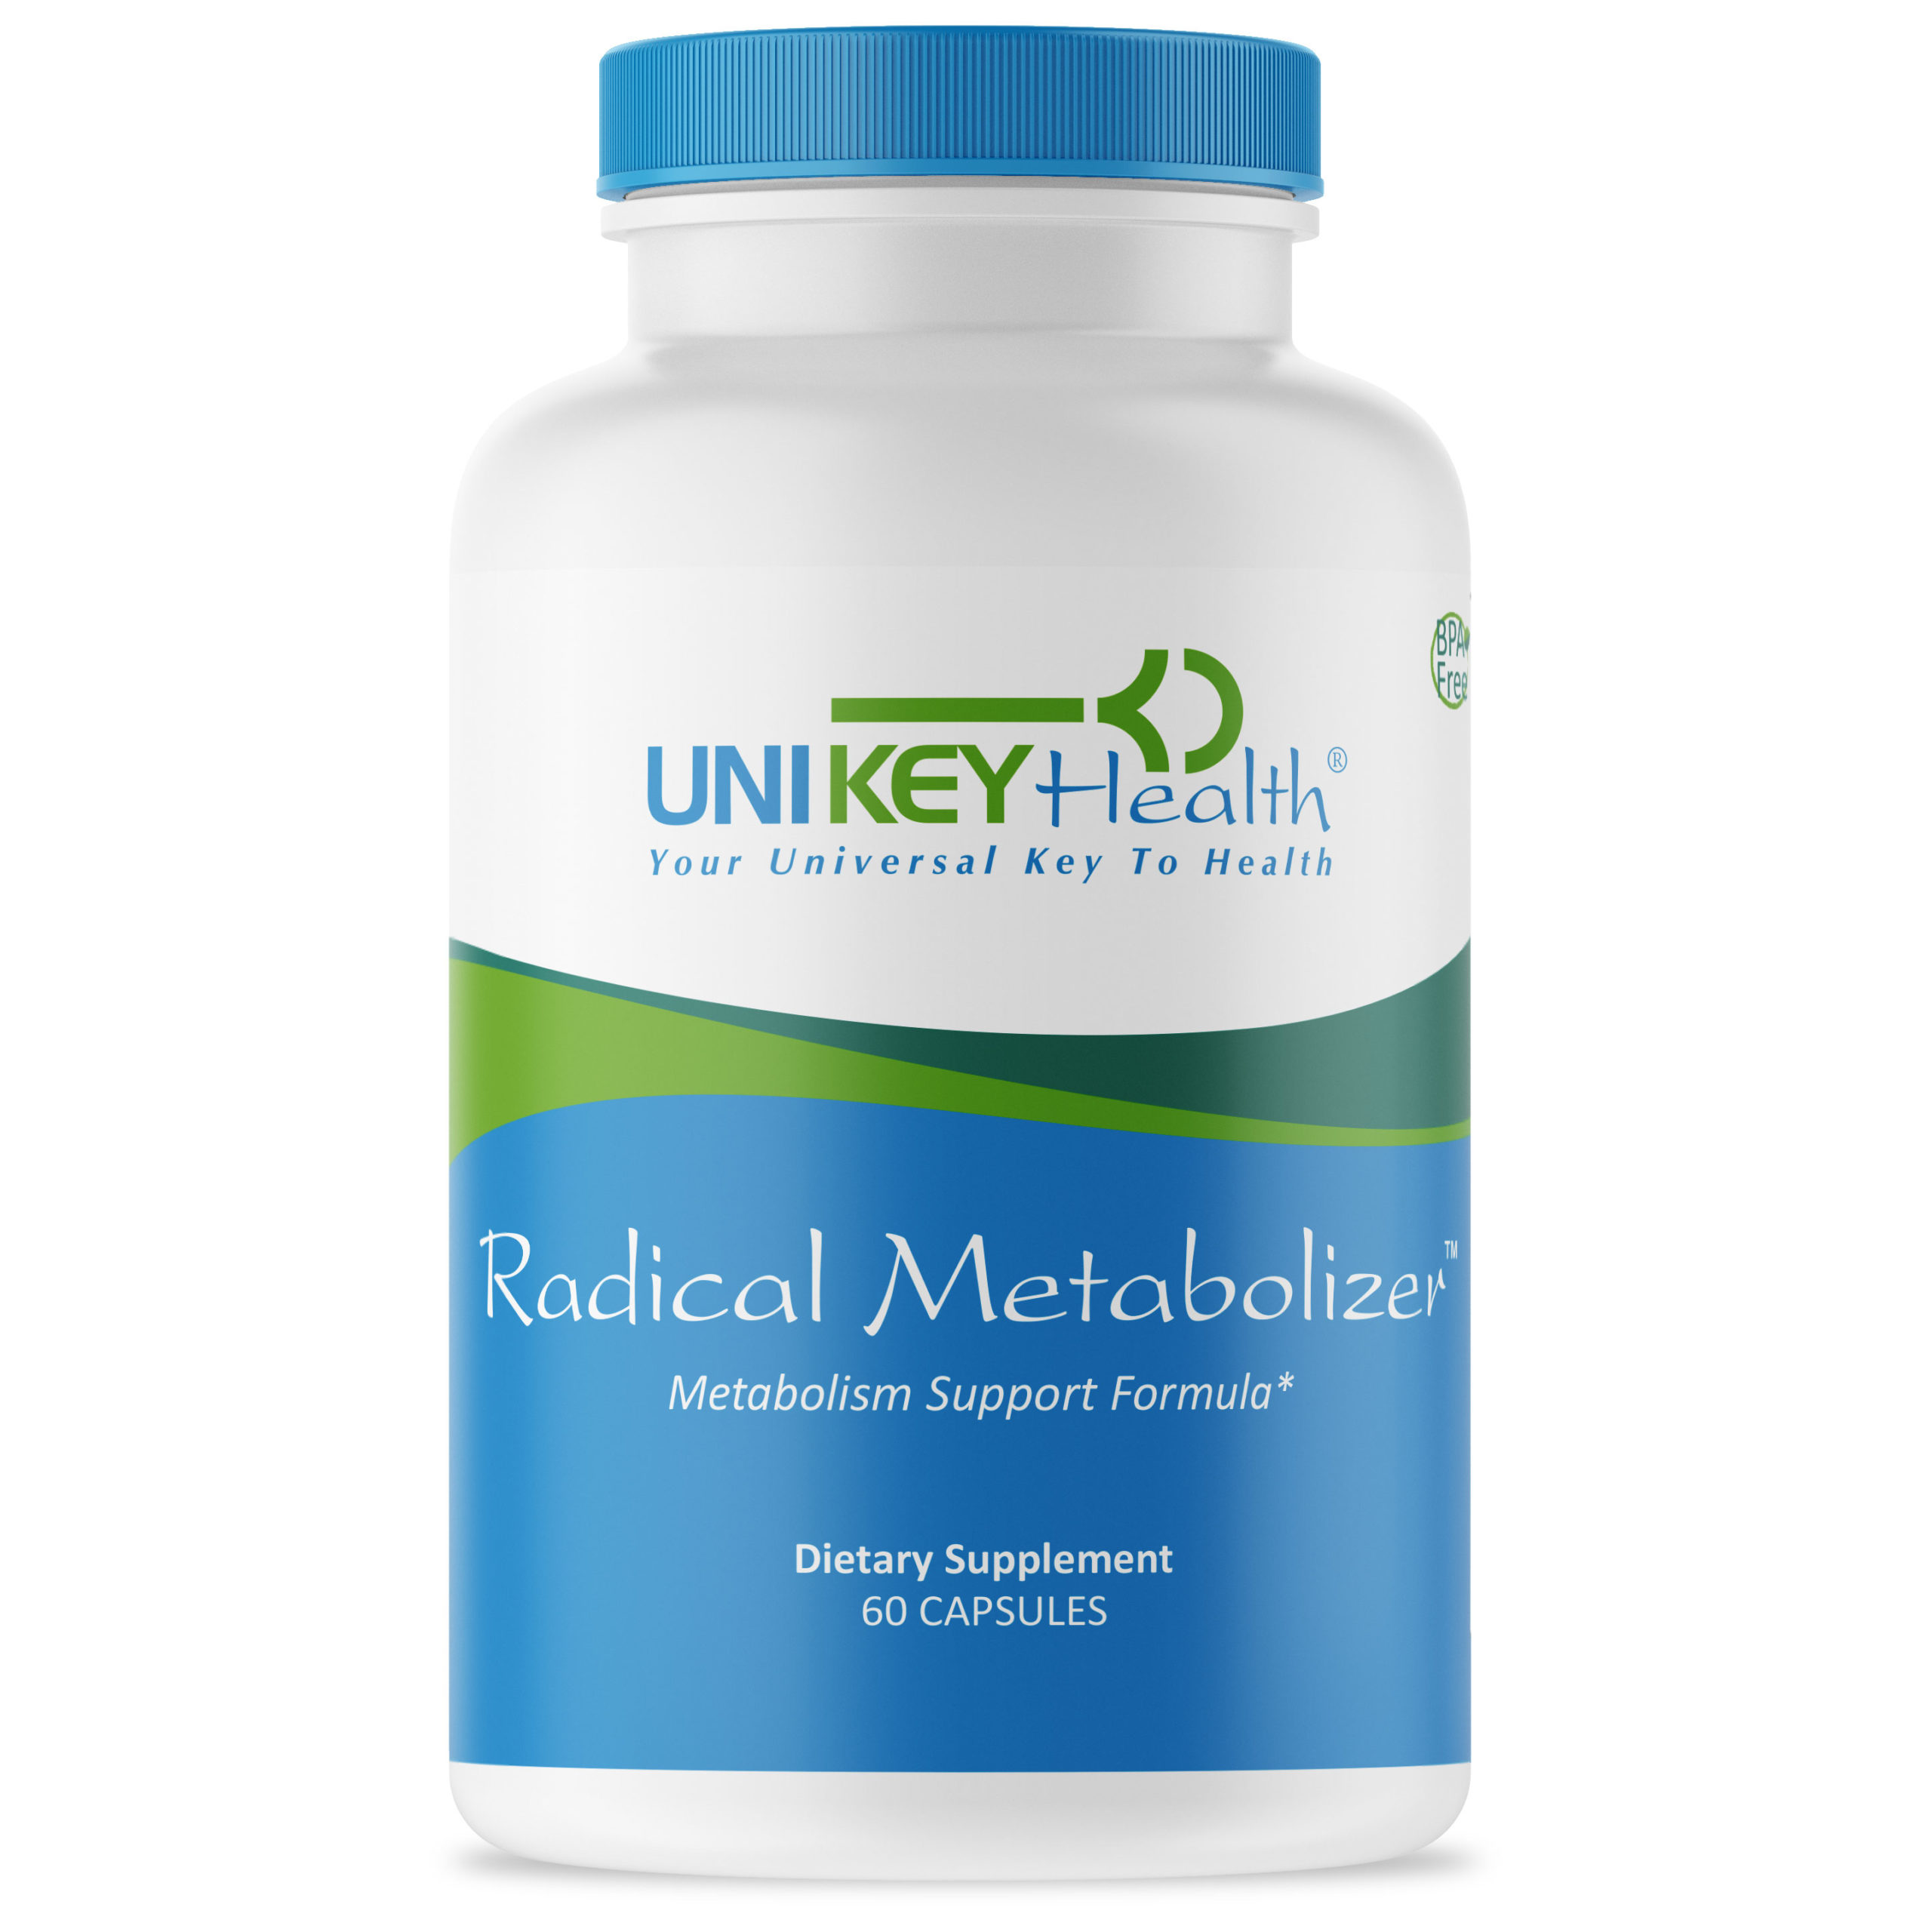 Radical Metabolizer by UNIKEY Health